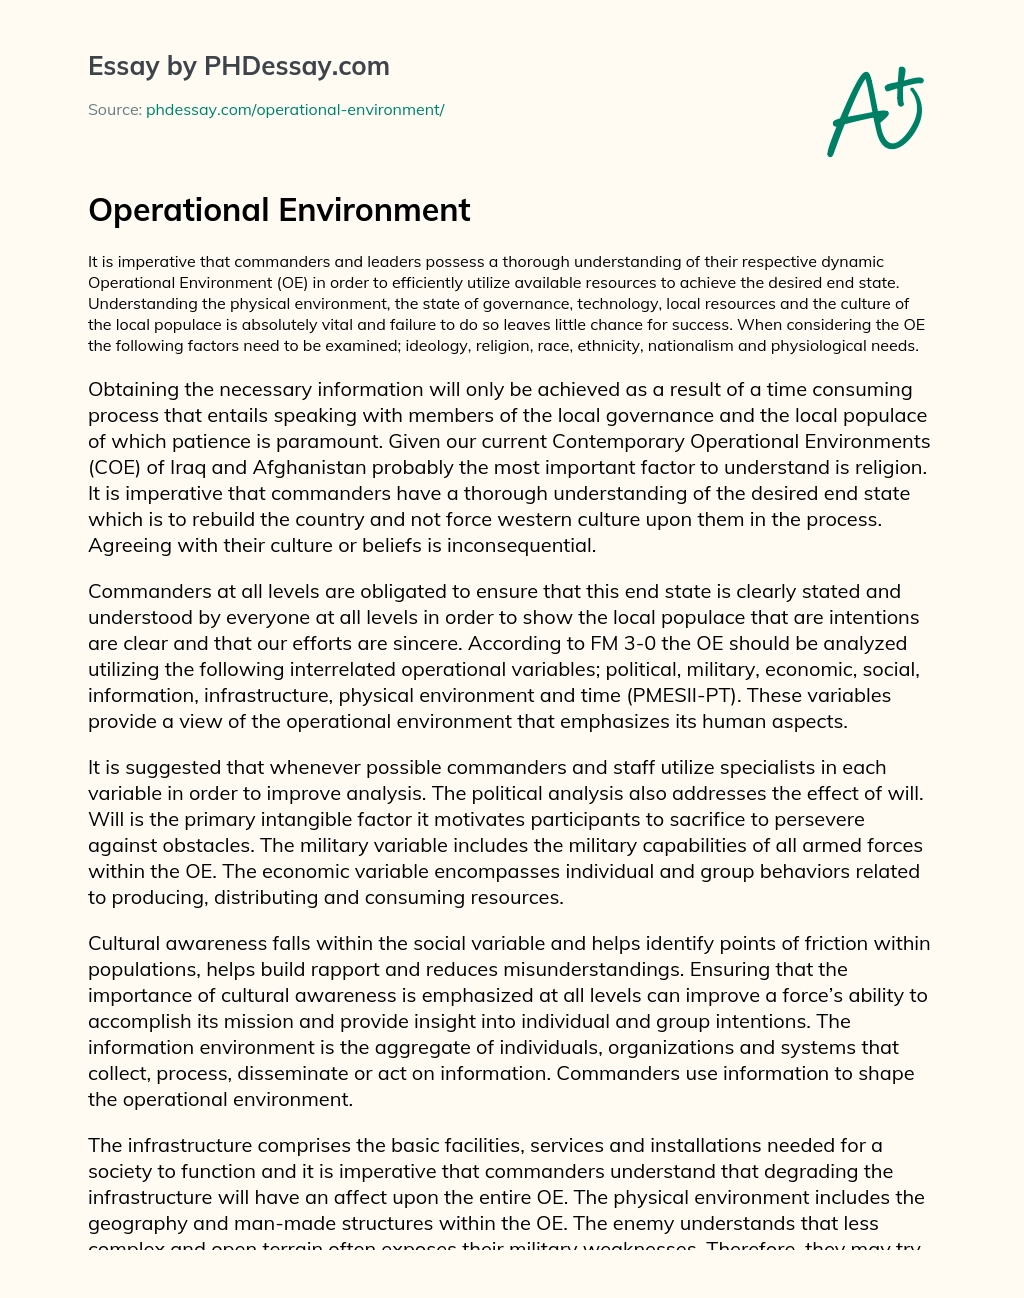 Operational Environment essay